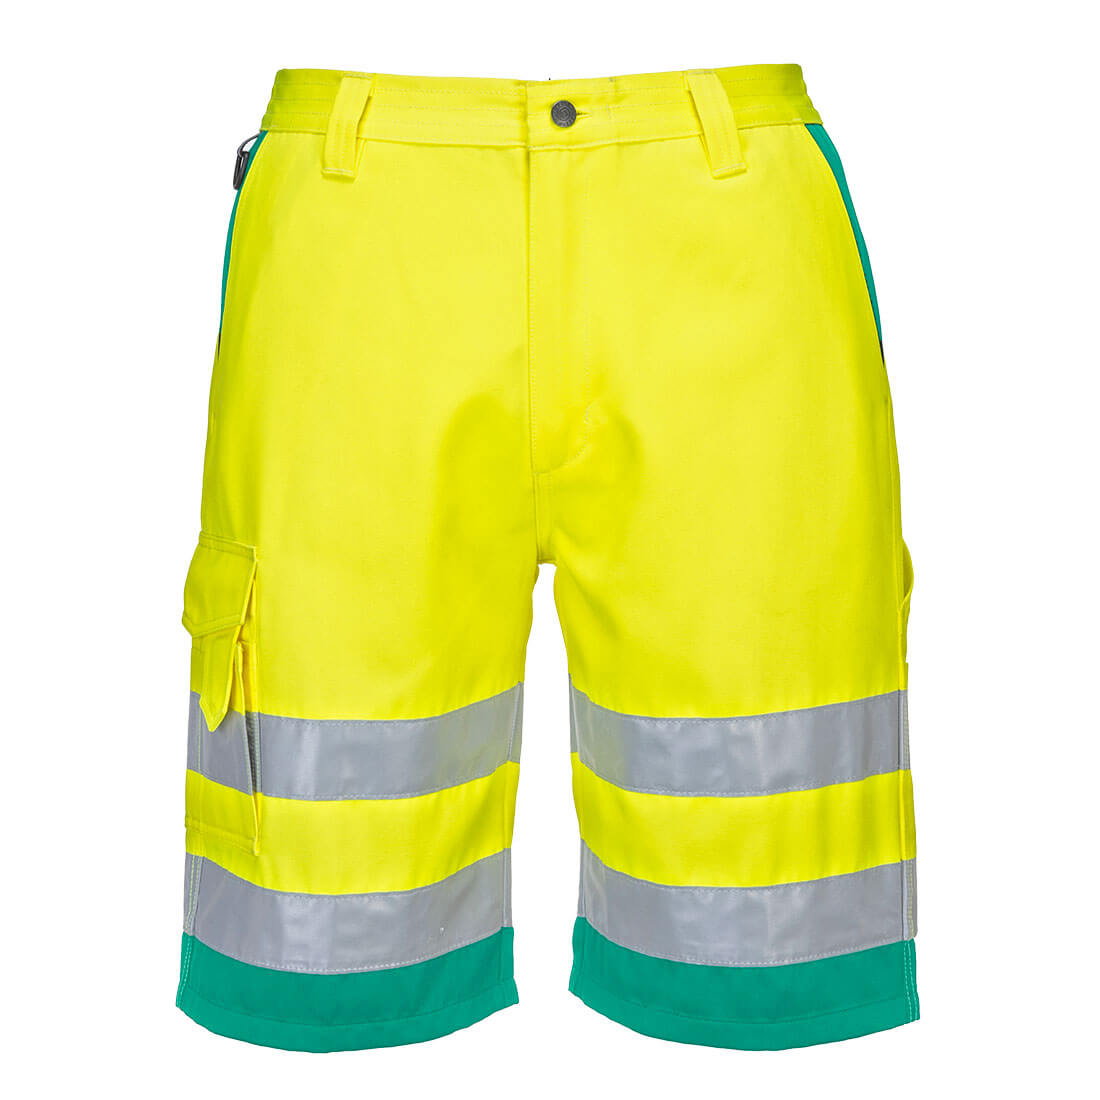 Portwest L043 Hi-Vis Lightweight Polycotton Shorts Yellow/Teal